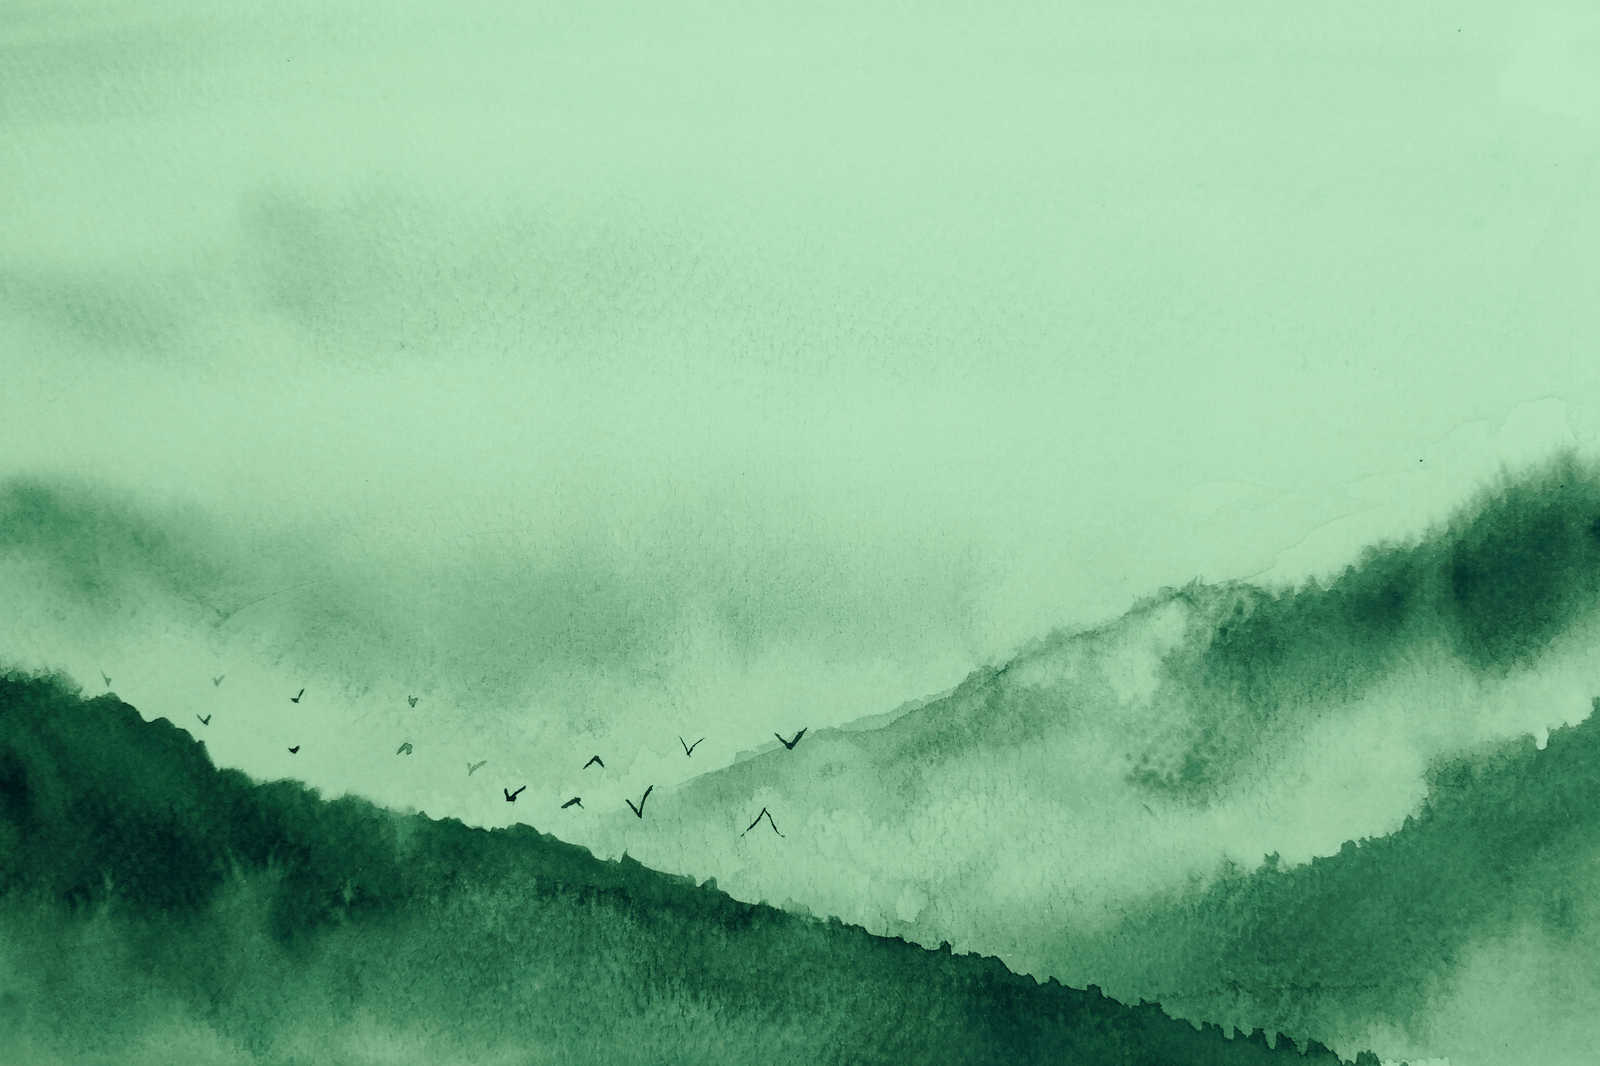             Tela con paesaggio nebbioso in stile pittura | verde, nero - 0,90 m x 0,60 m
        